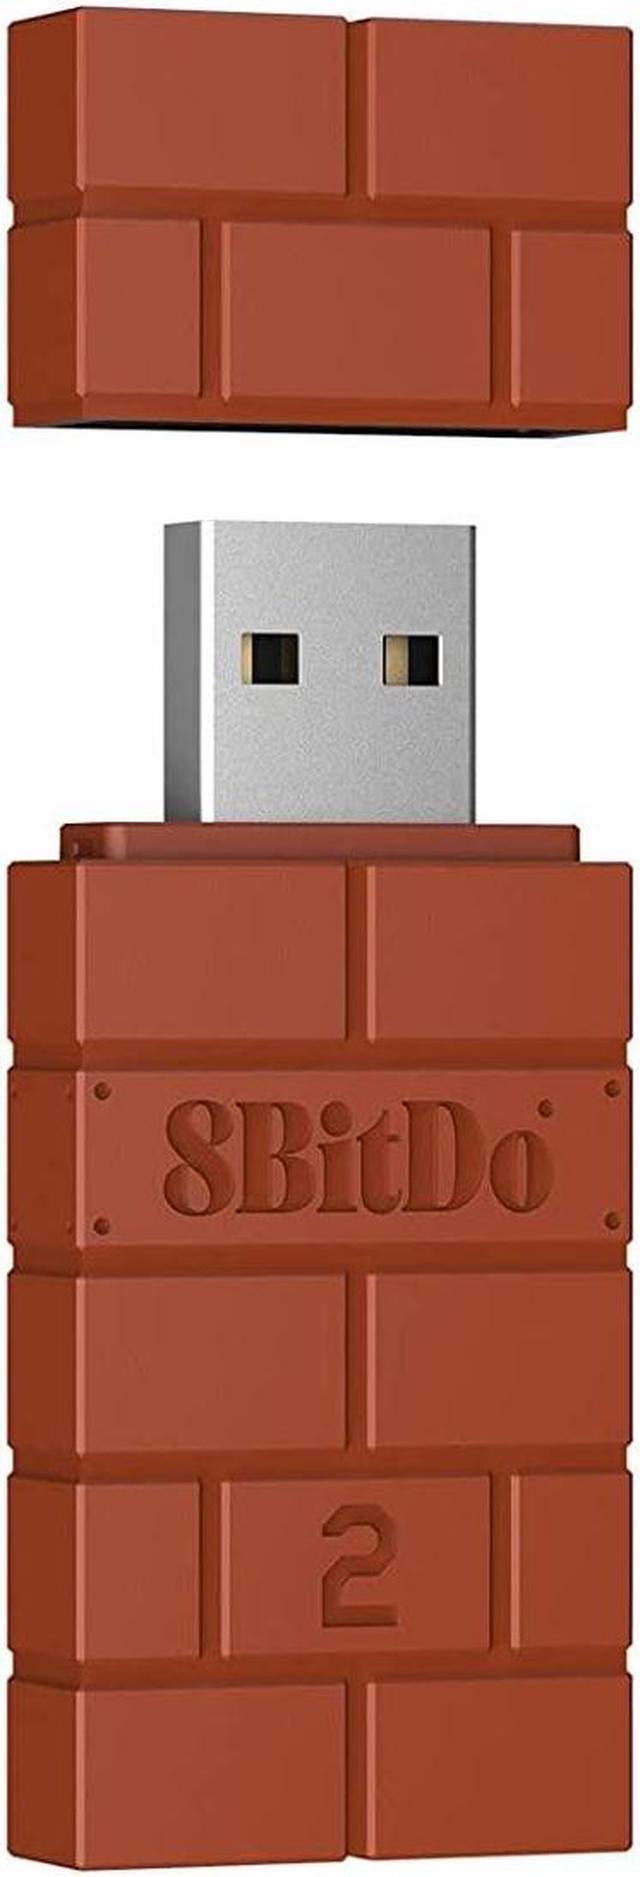 8Bitdo Wireless USB Adapter 2 for Xbox Series X & S, Xbox One, Switch Pro,  PS5